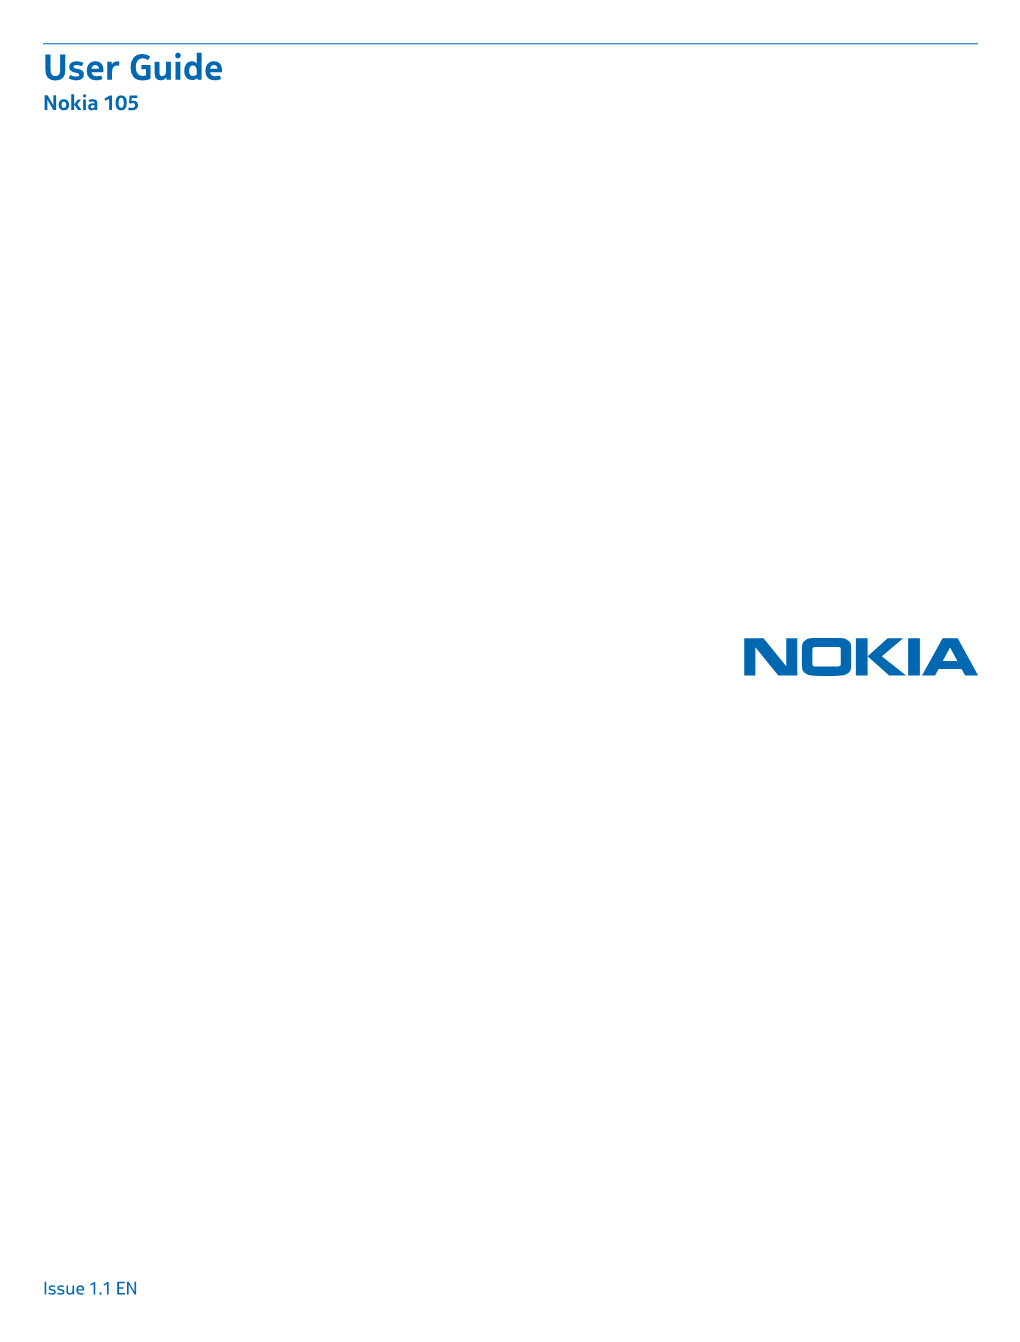 Nokia 105 User Guide